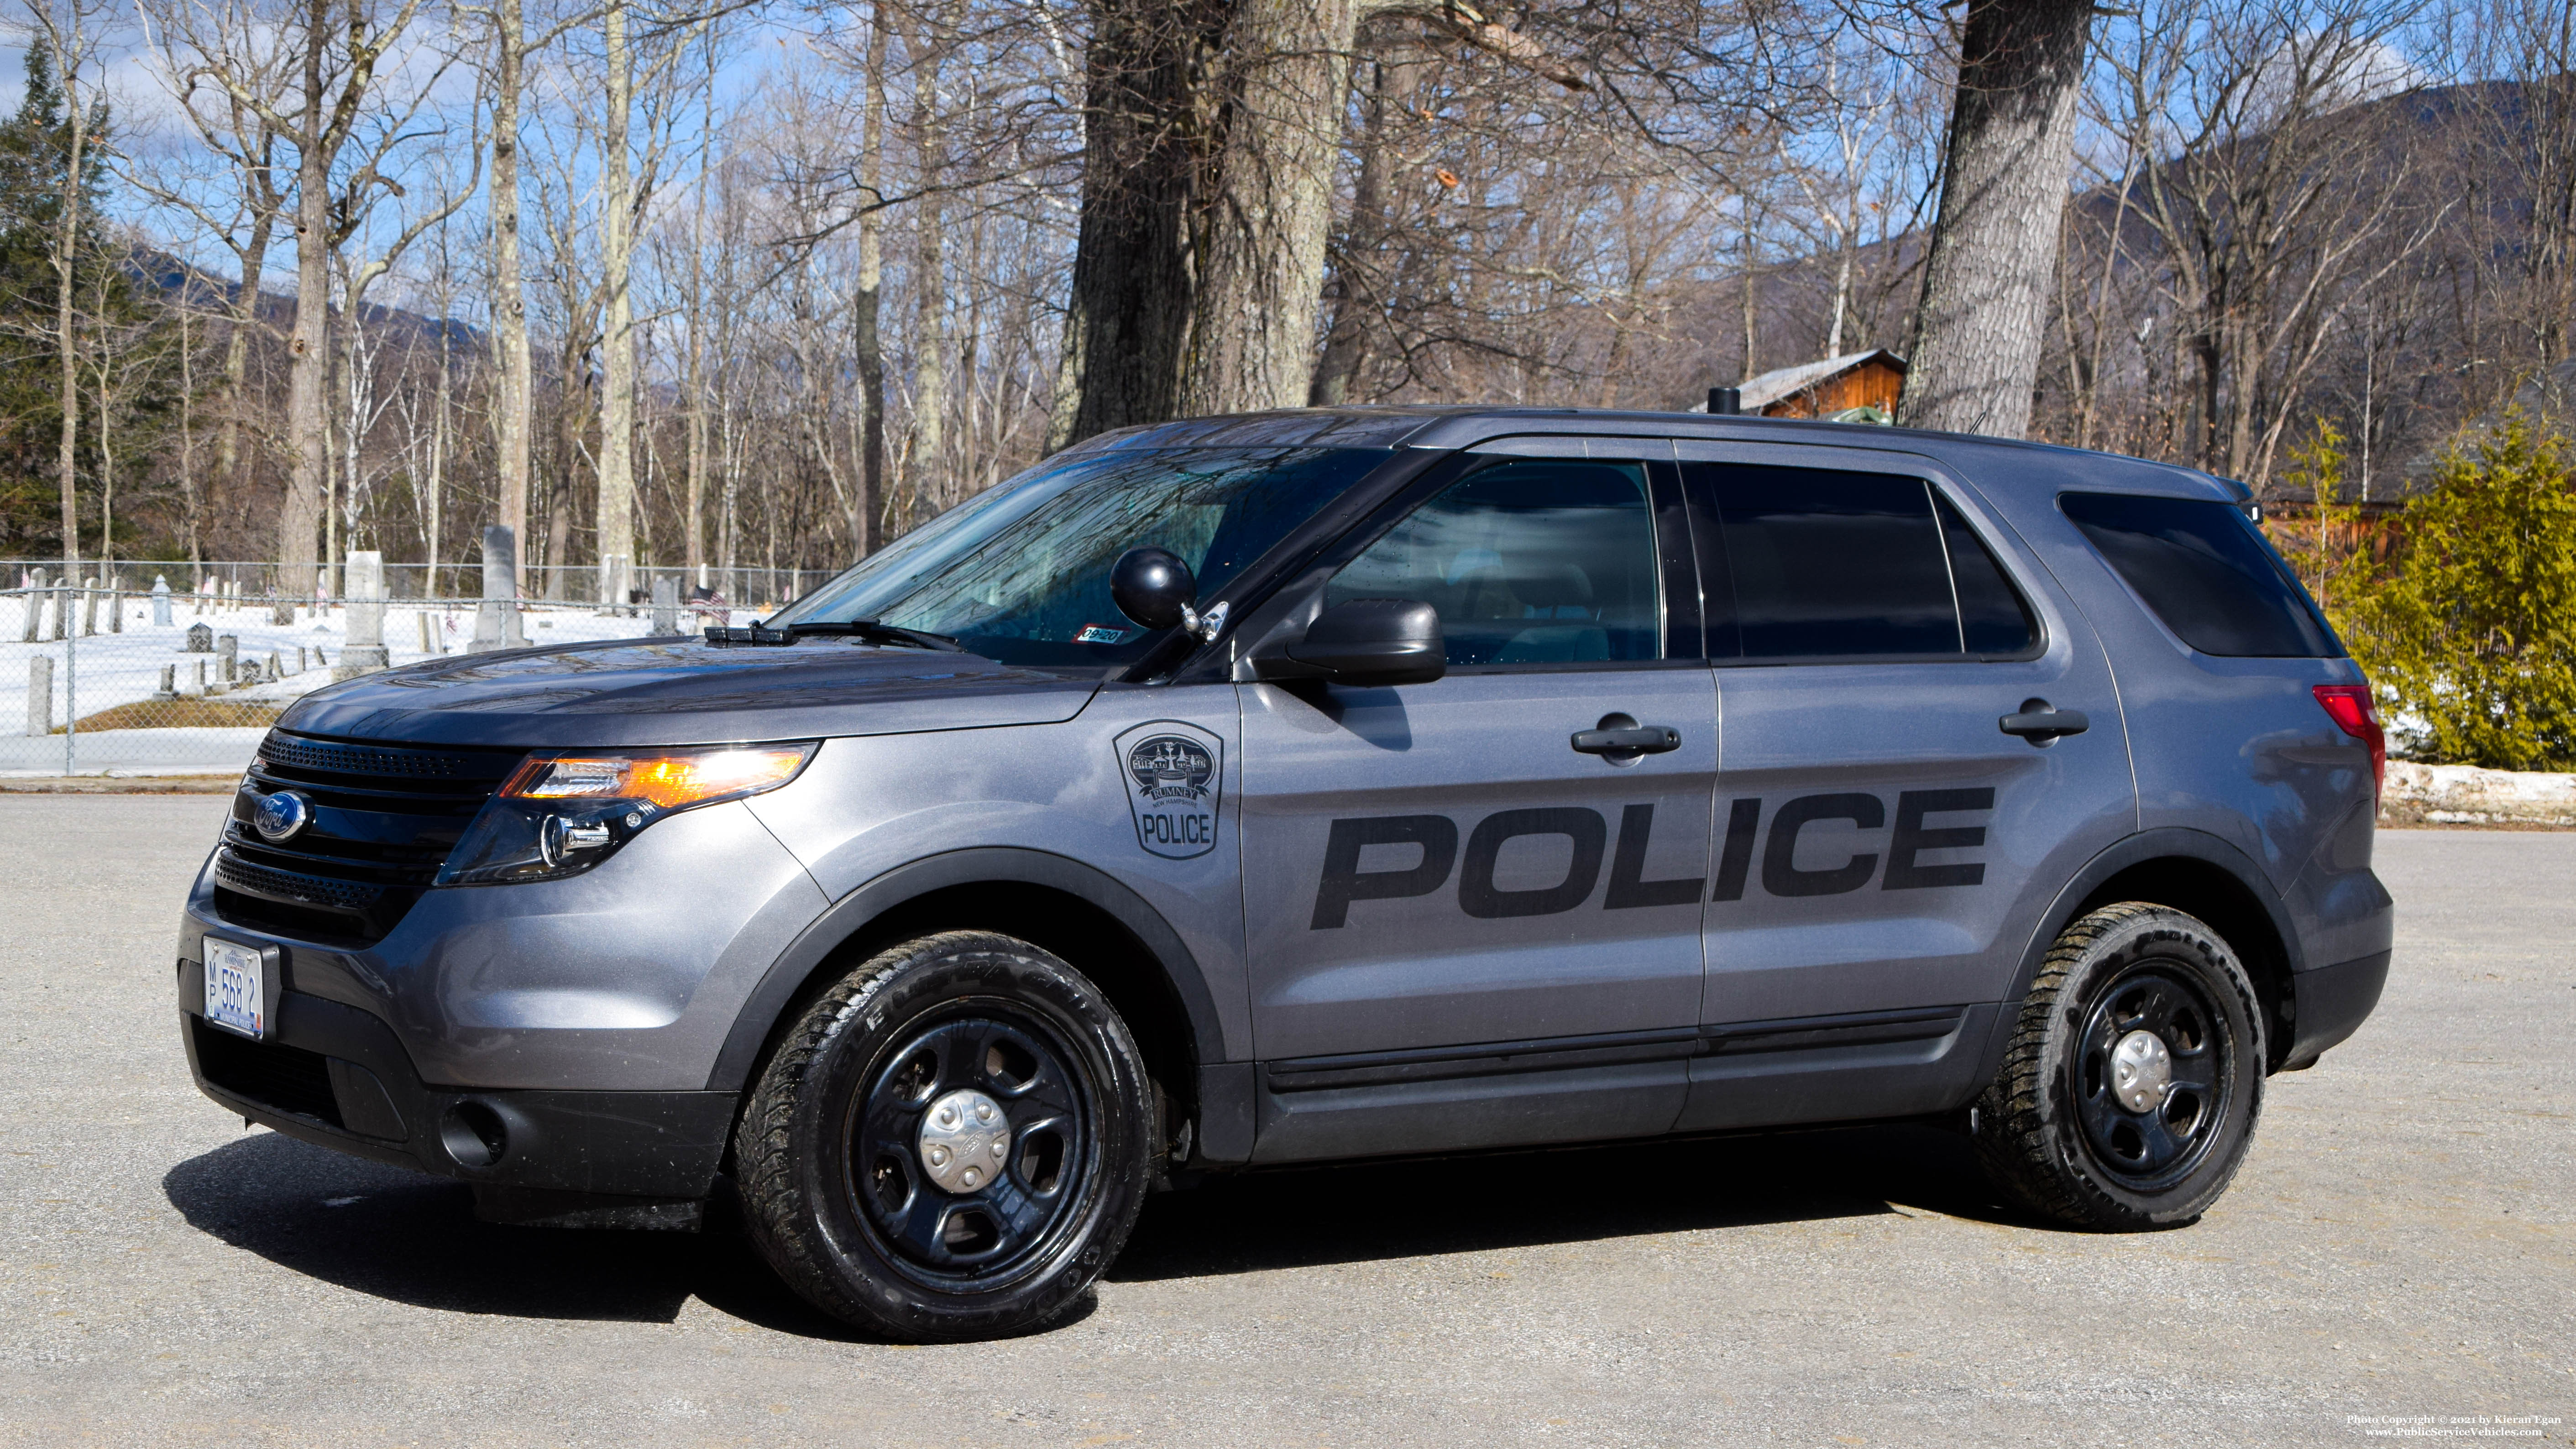 A photo  of Rumney Police
            Car 2, a 2015 Ford Police Interceptor Utility             taken by Kieran Egan